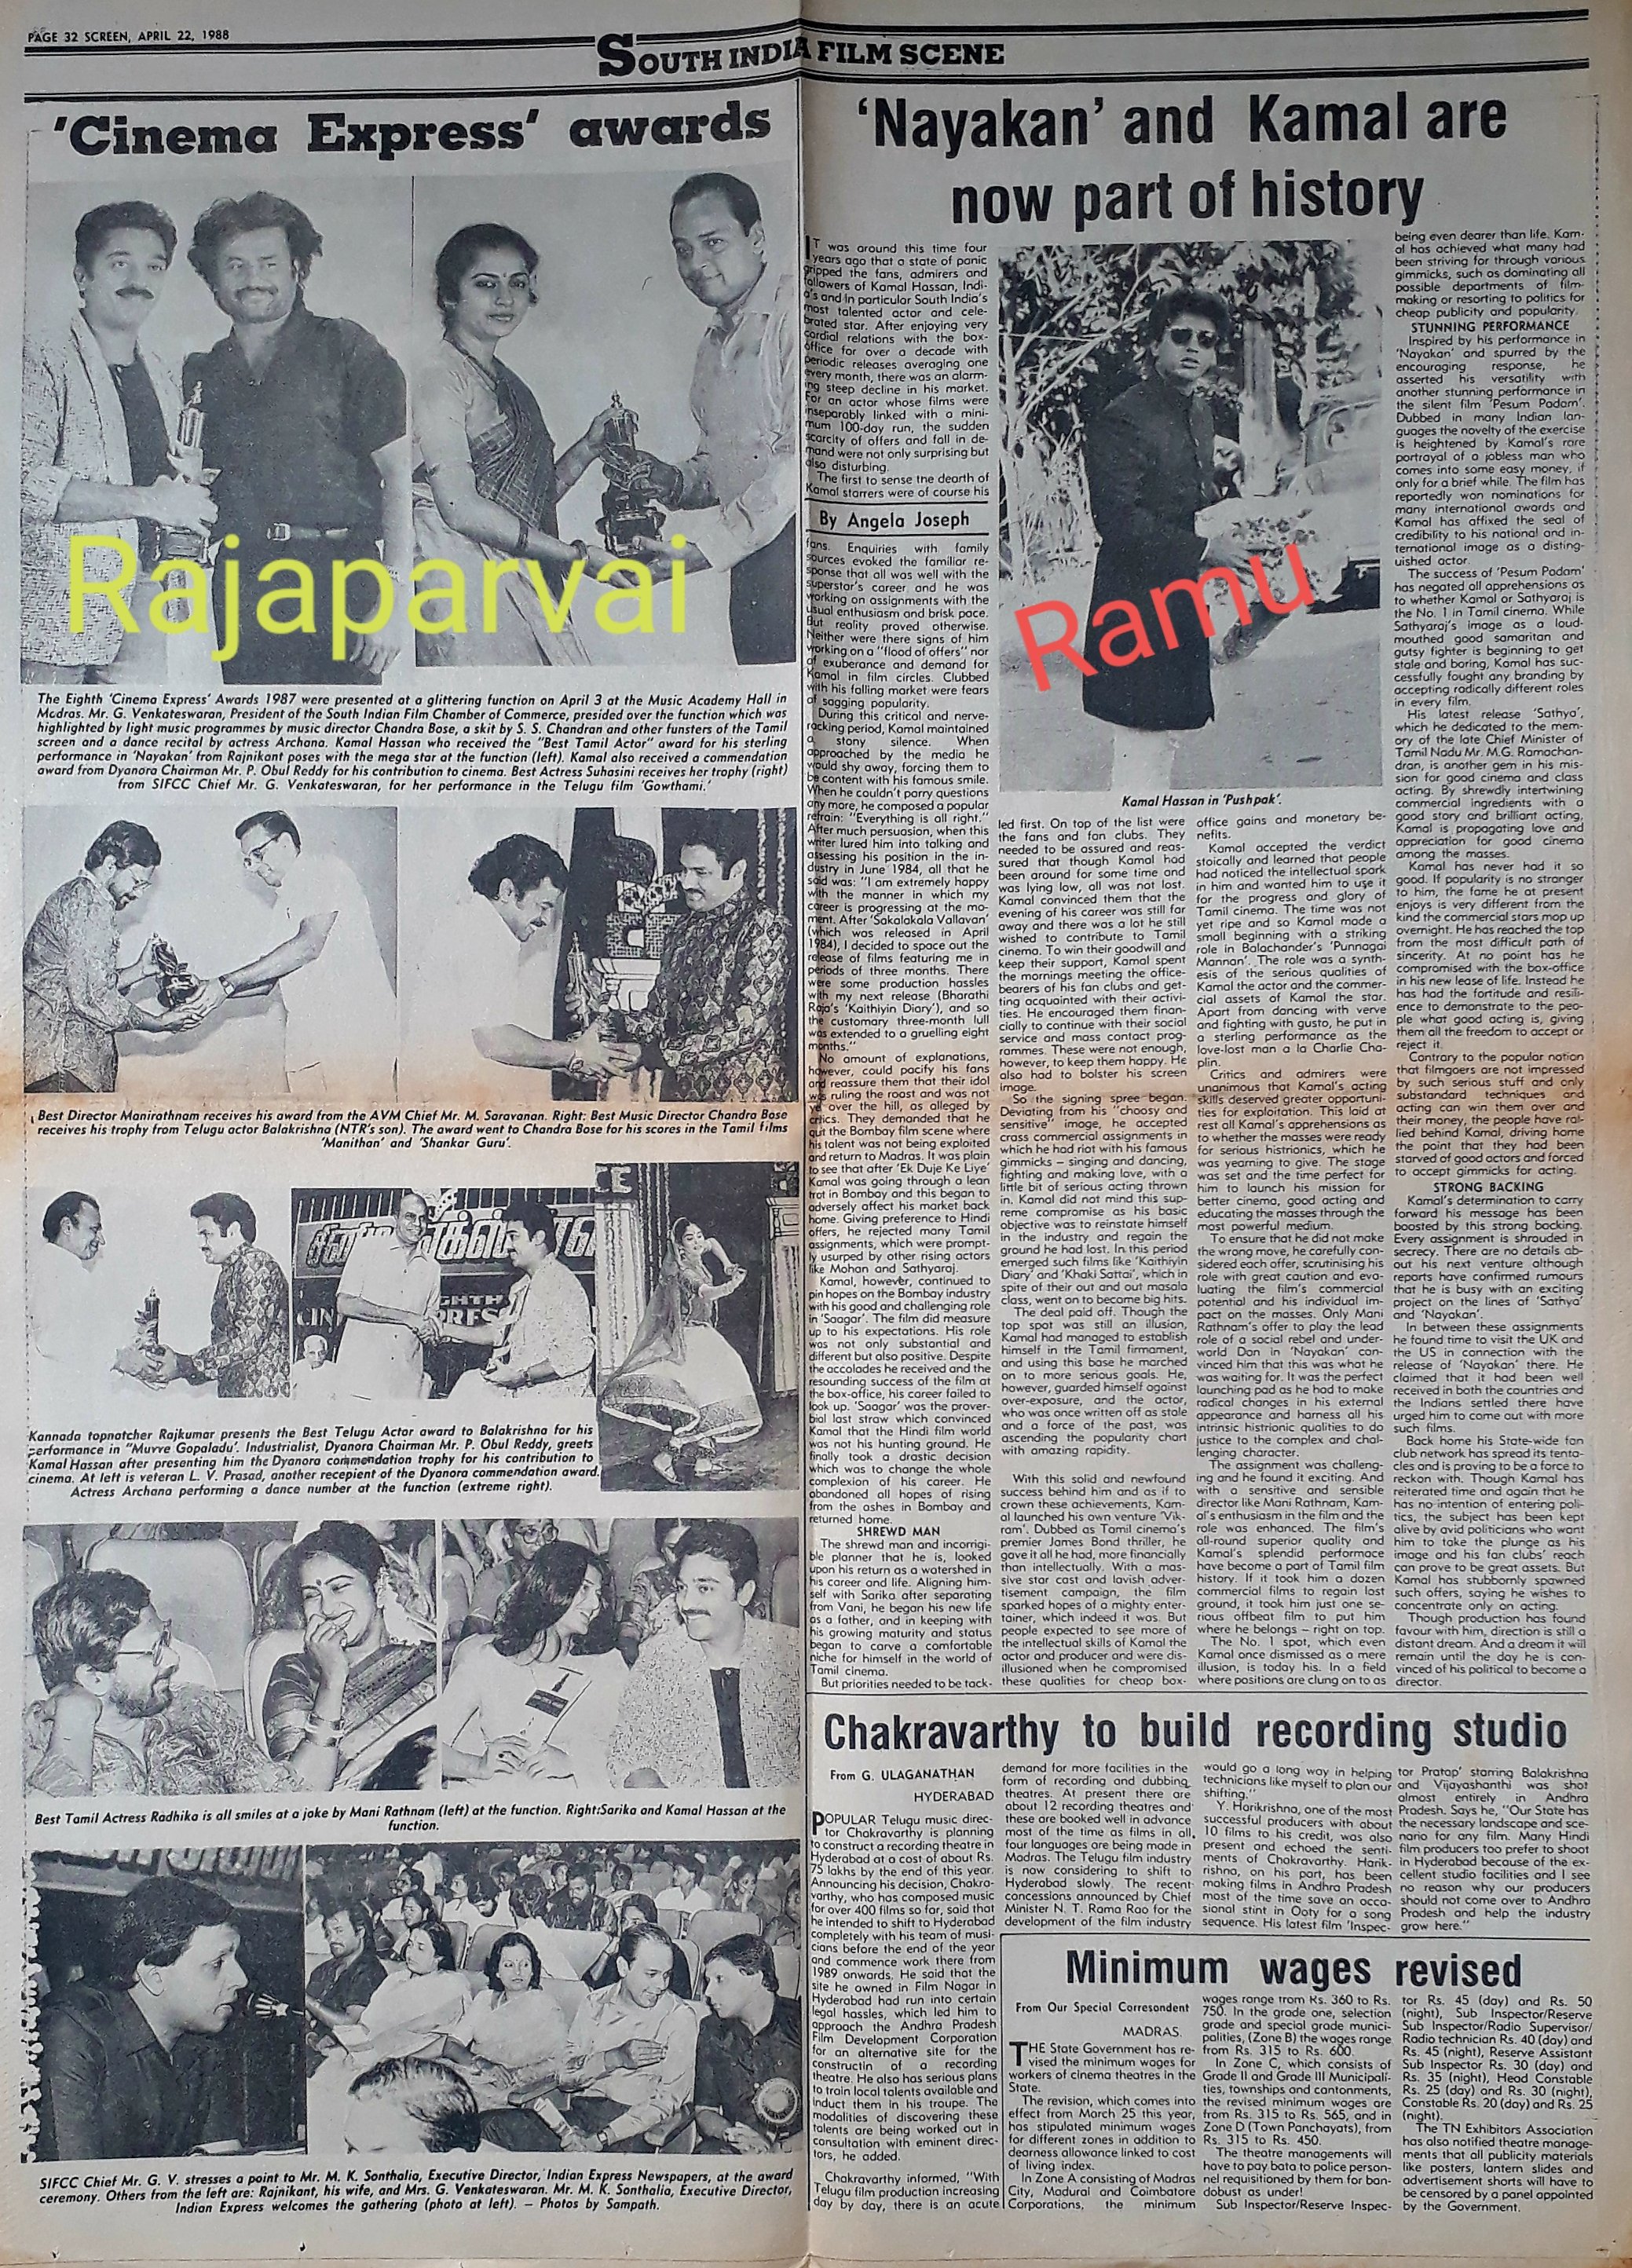 LV Prasad - Telugu and Tamil film music director wallpapers